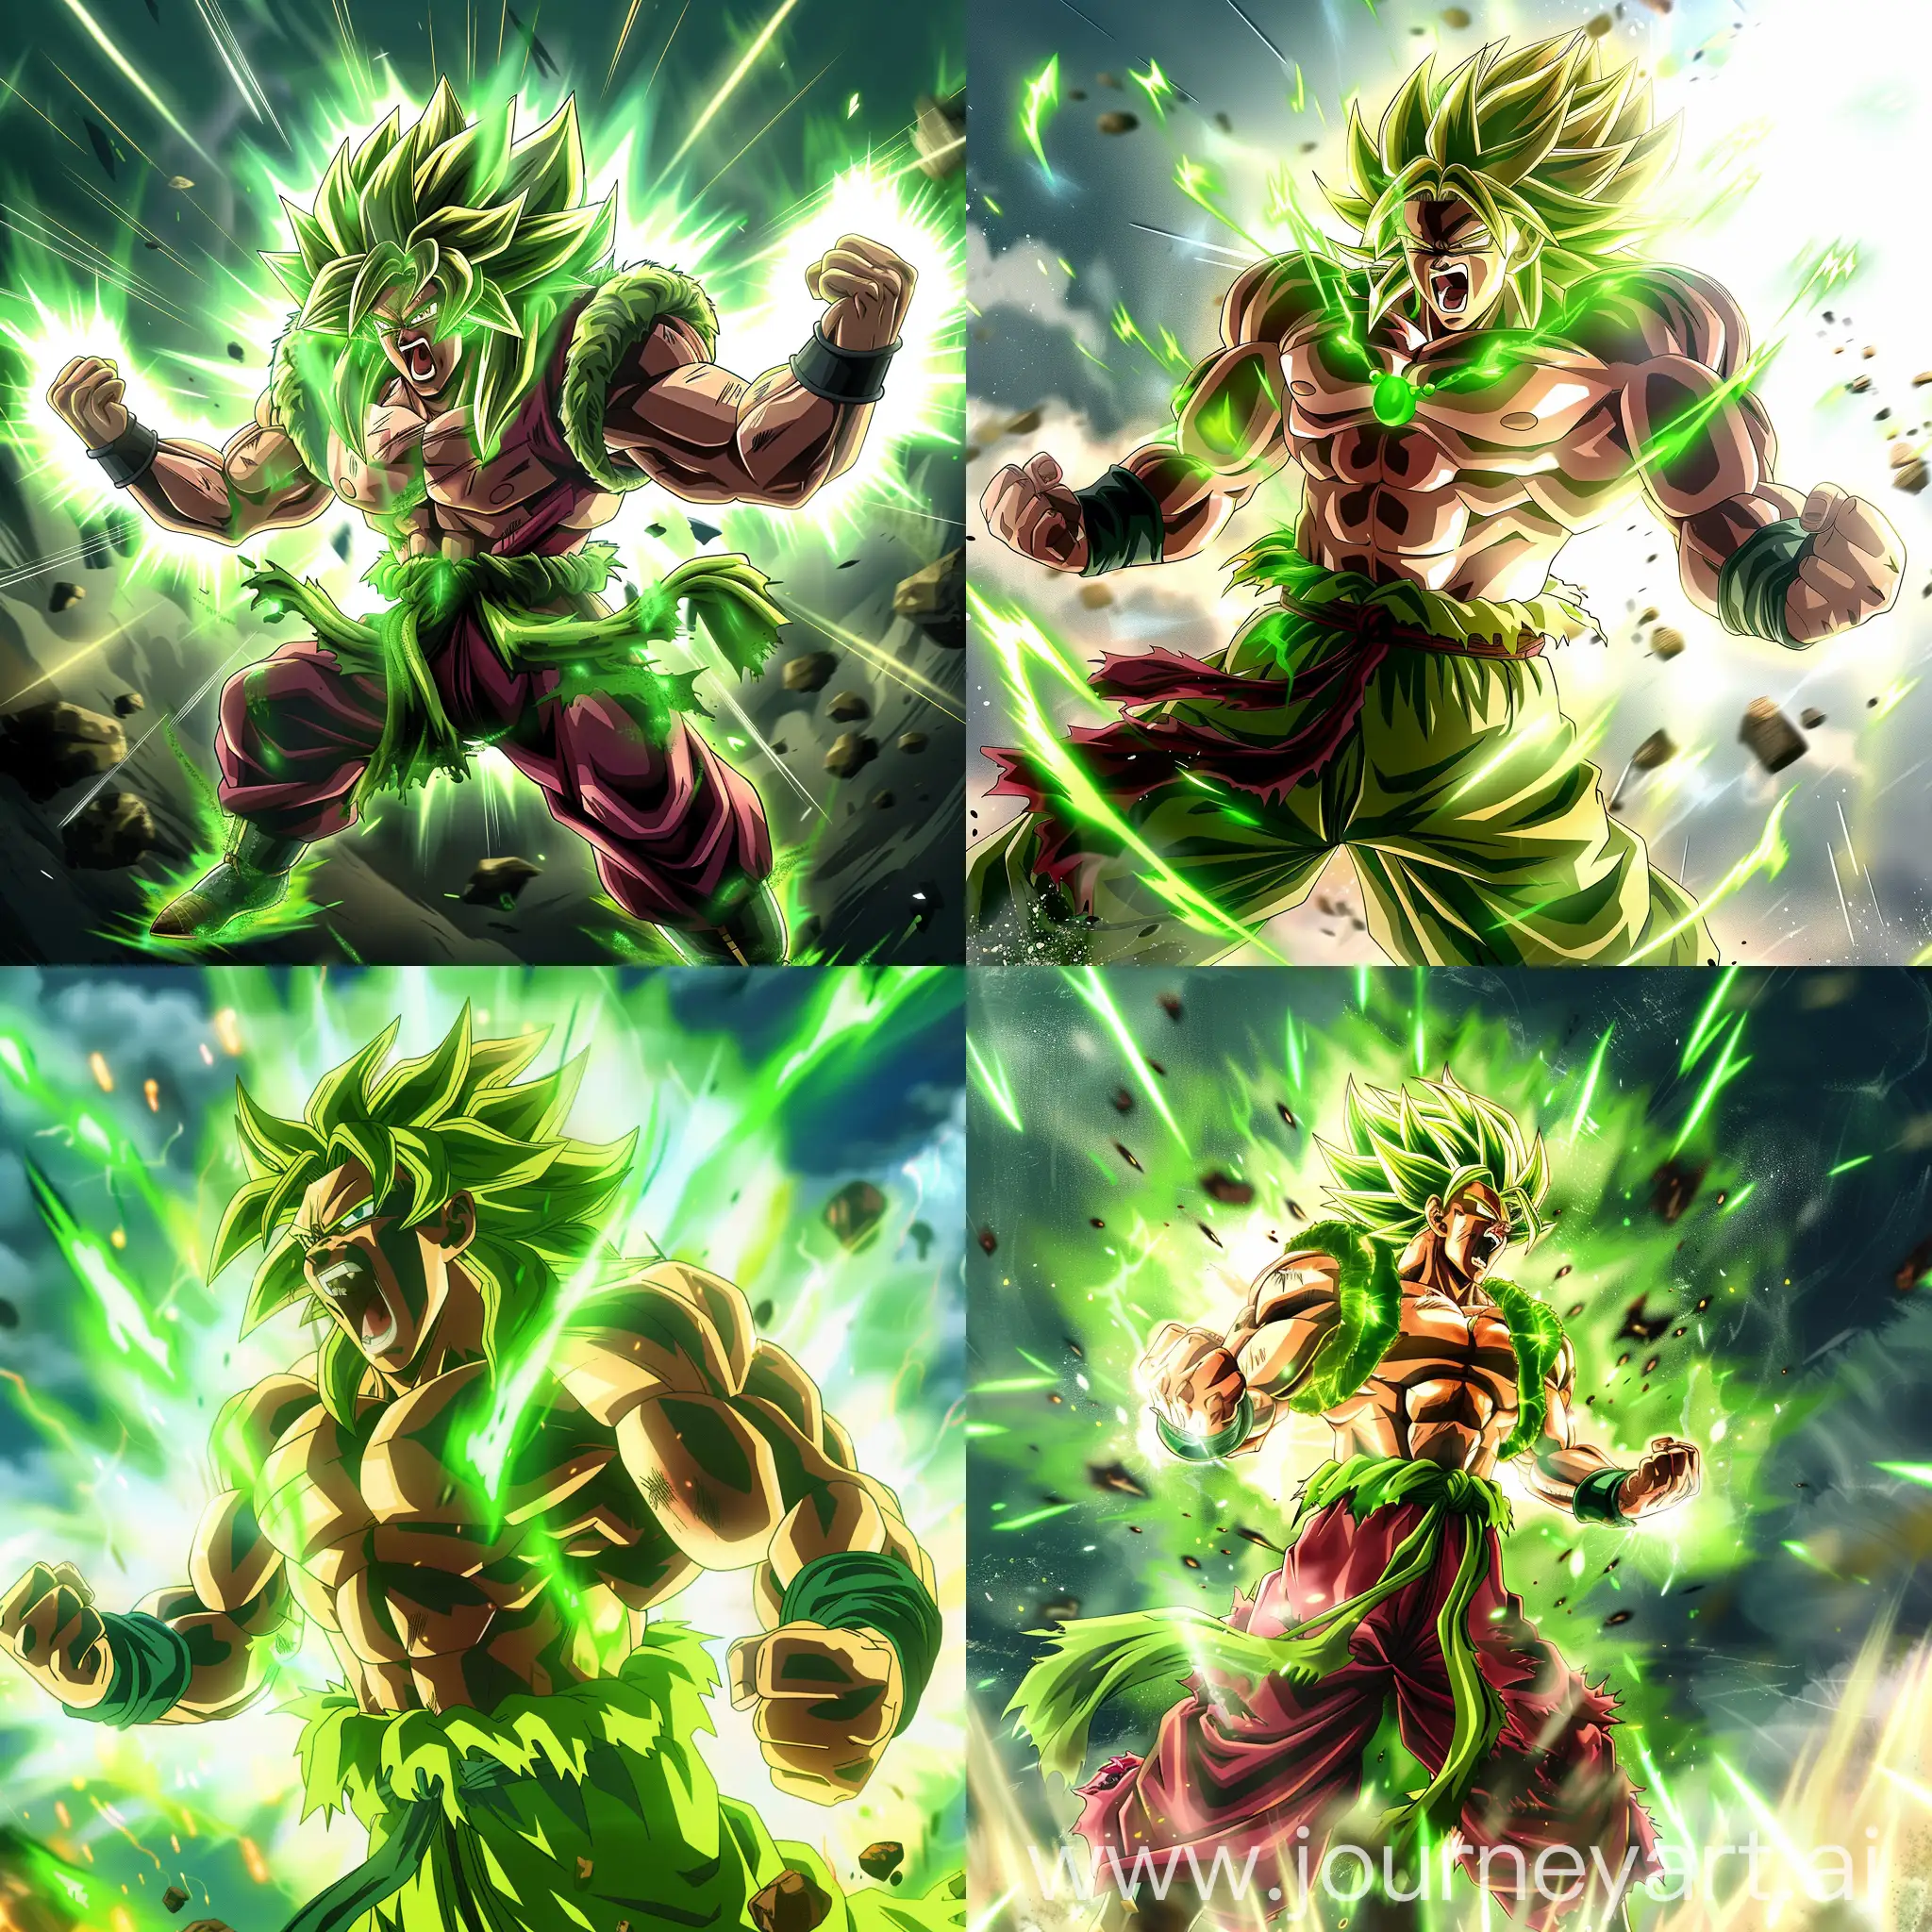 Broly-the-Legendary-Super-Saiyan-Powering-Up-with-Intense-Bursting-Green-Aura